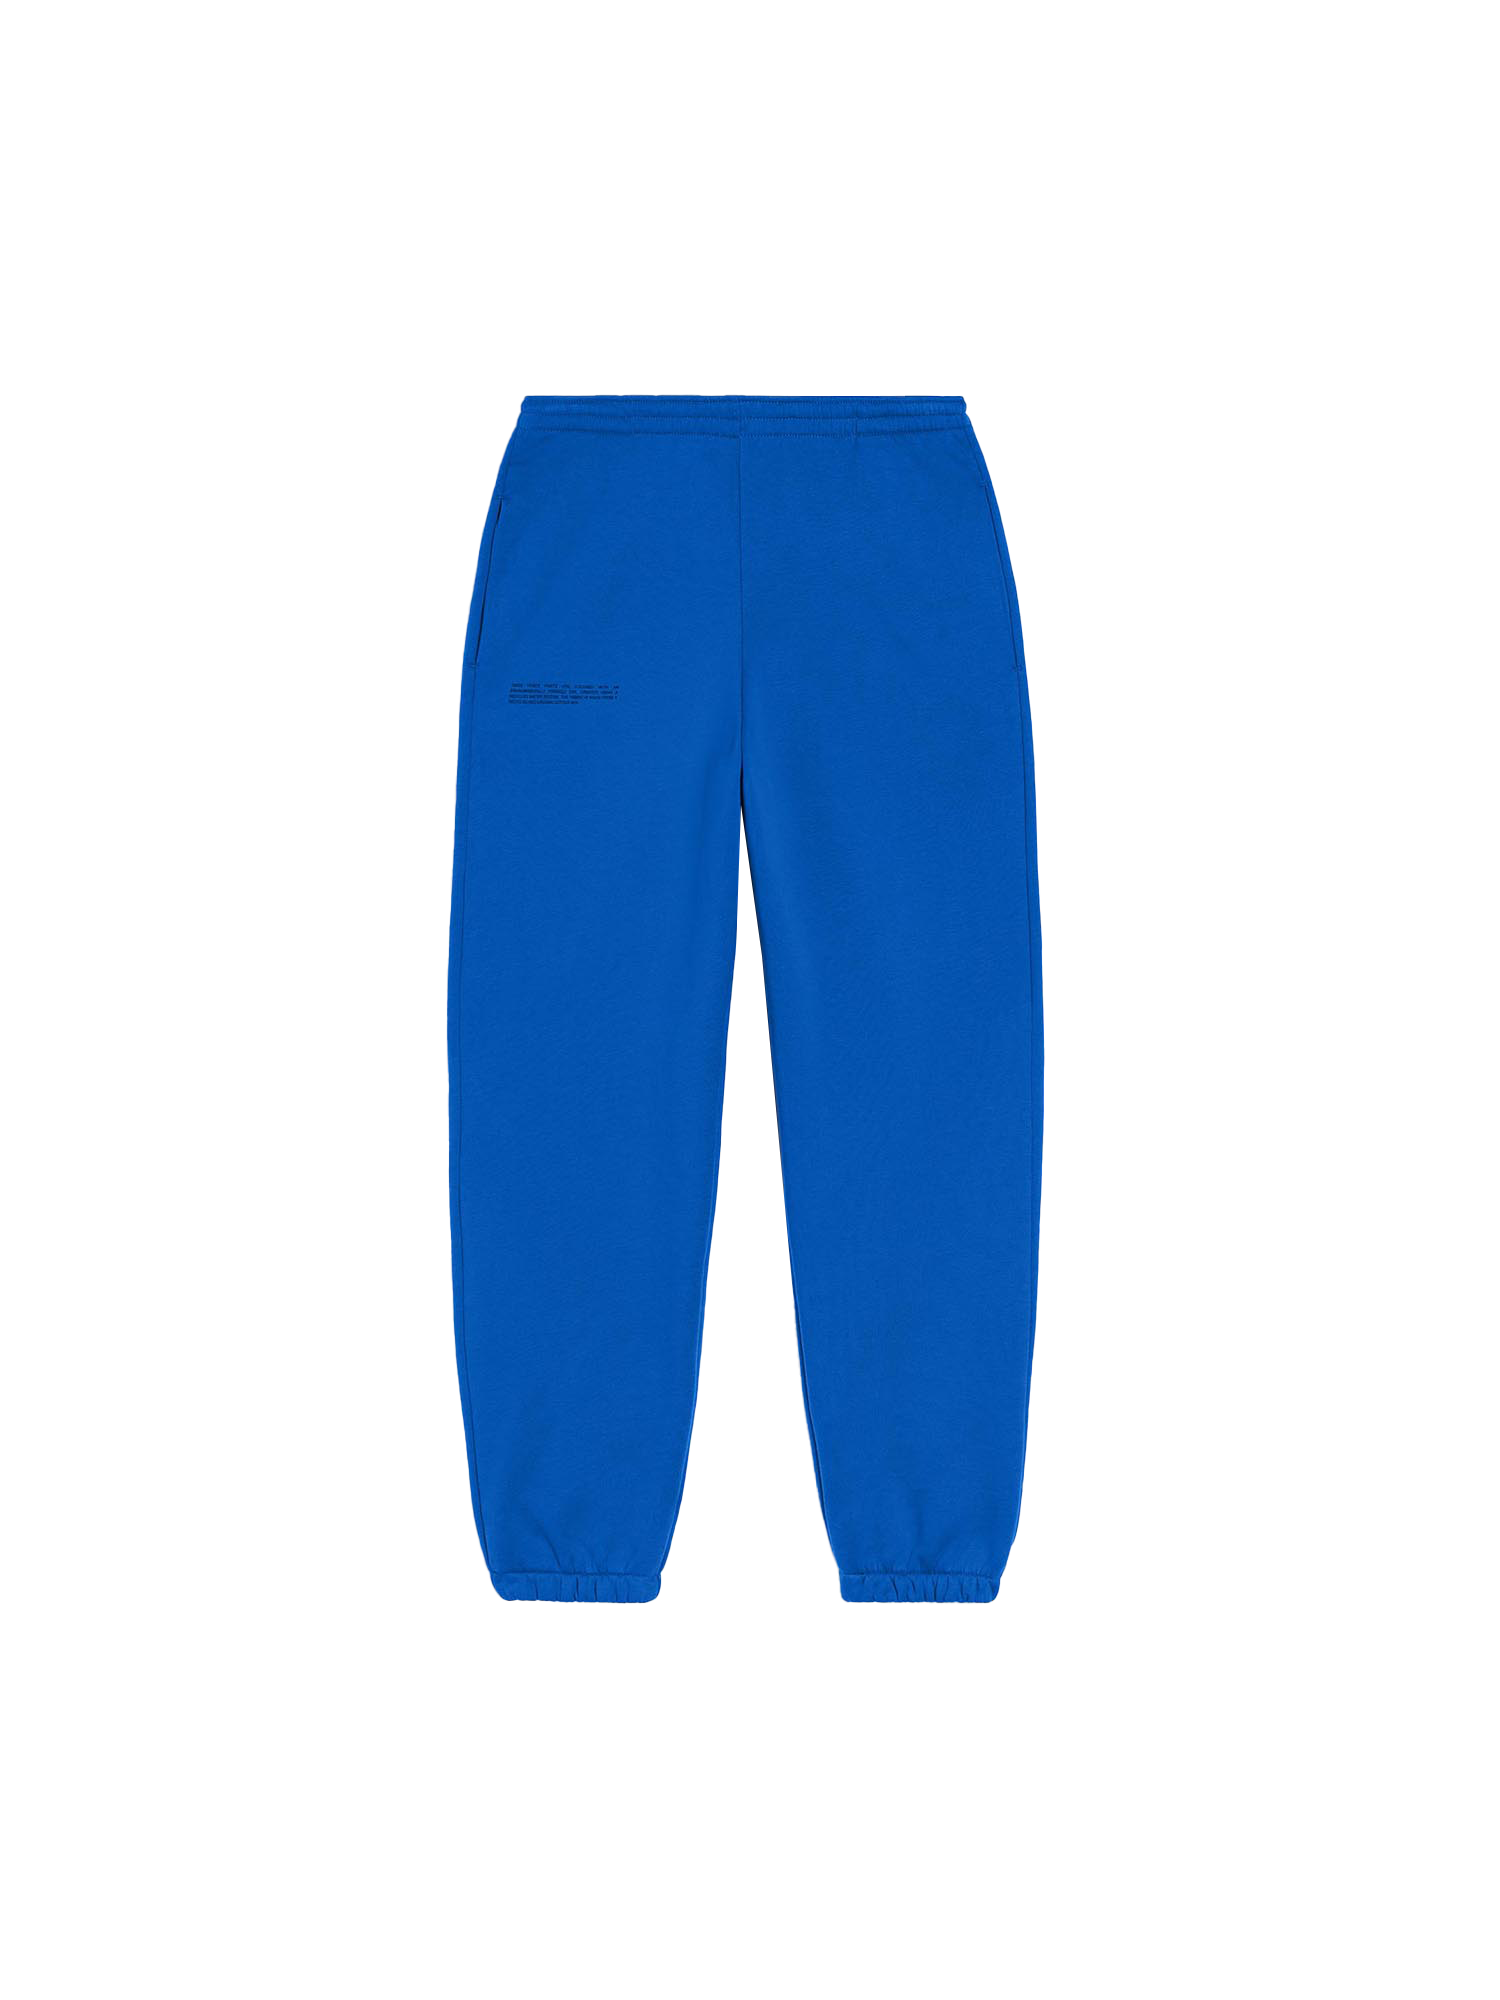 Signature Track Pants Core—cobalt blue packshot-3